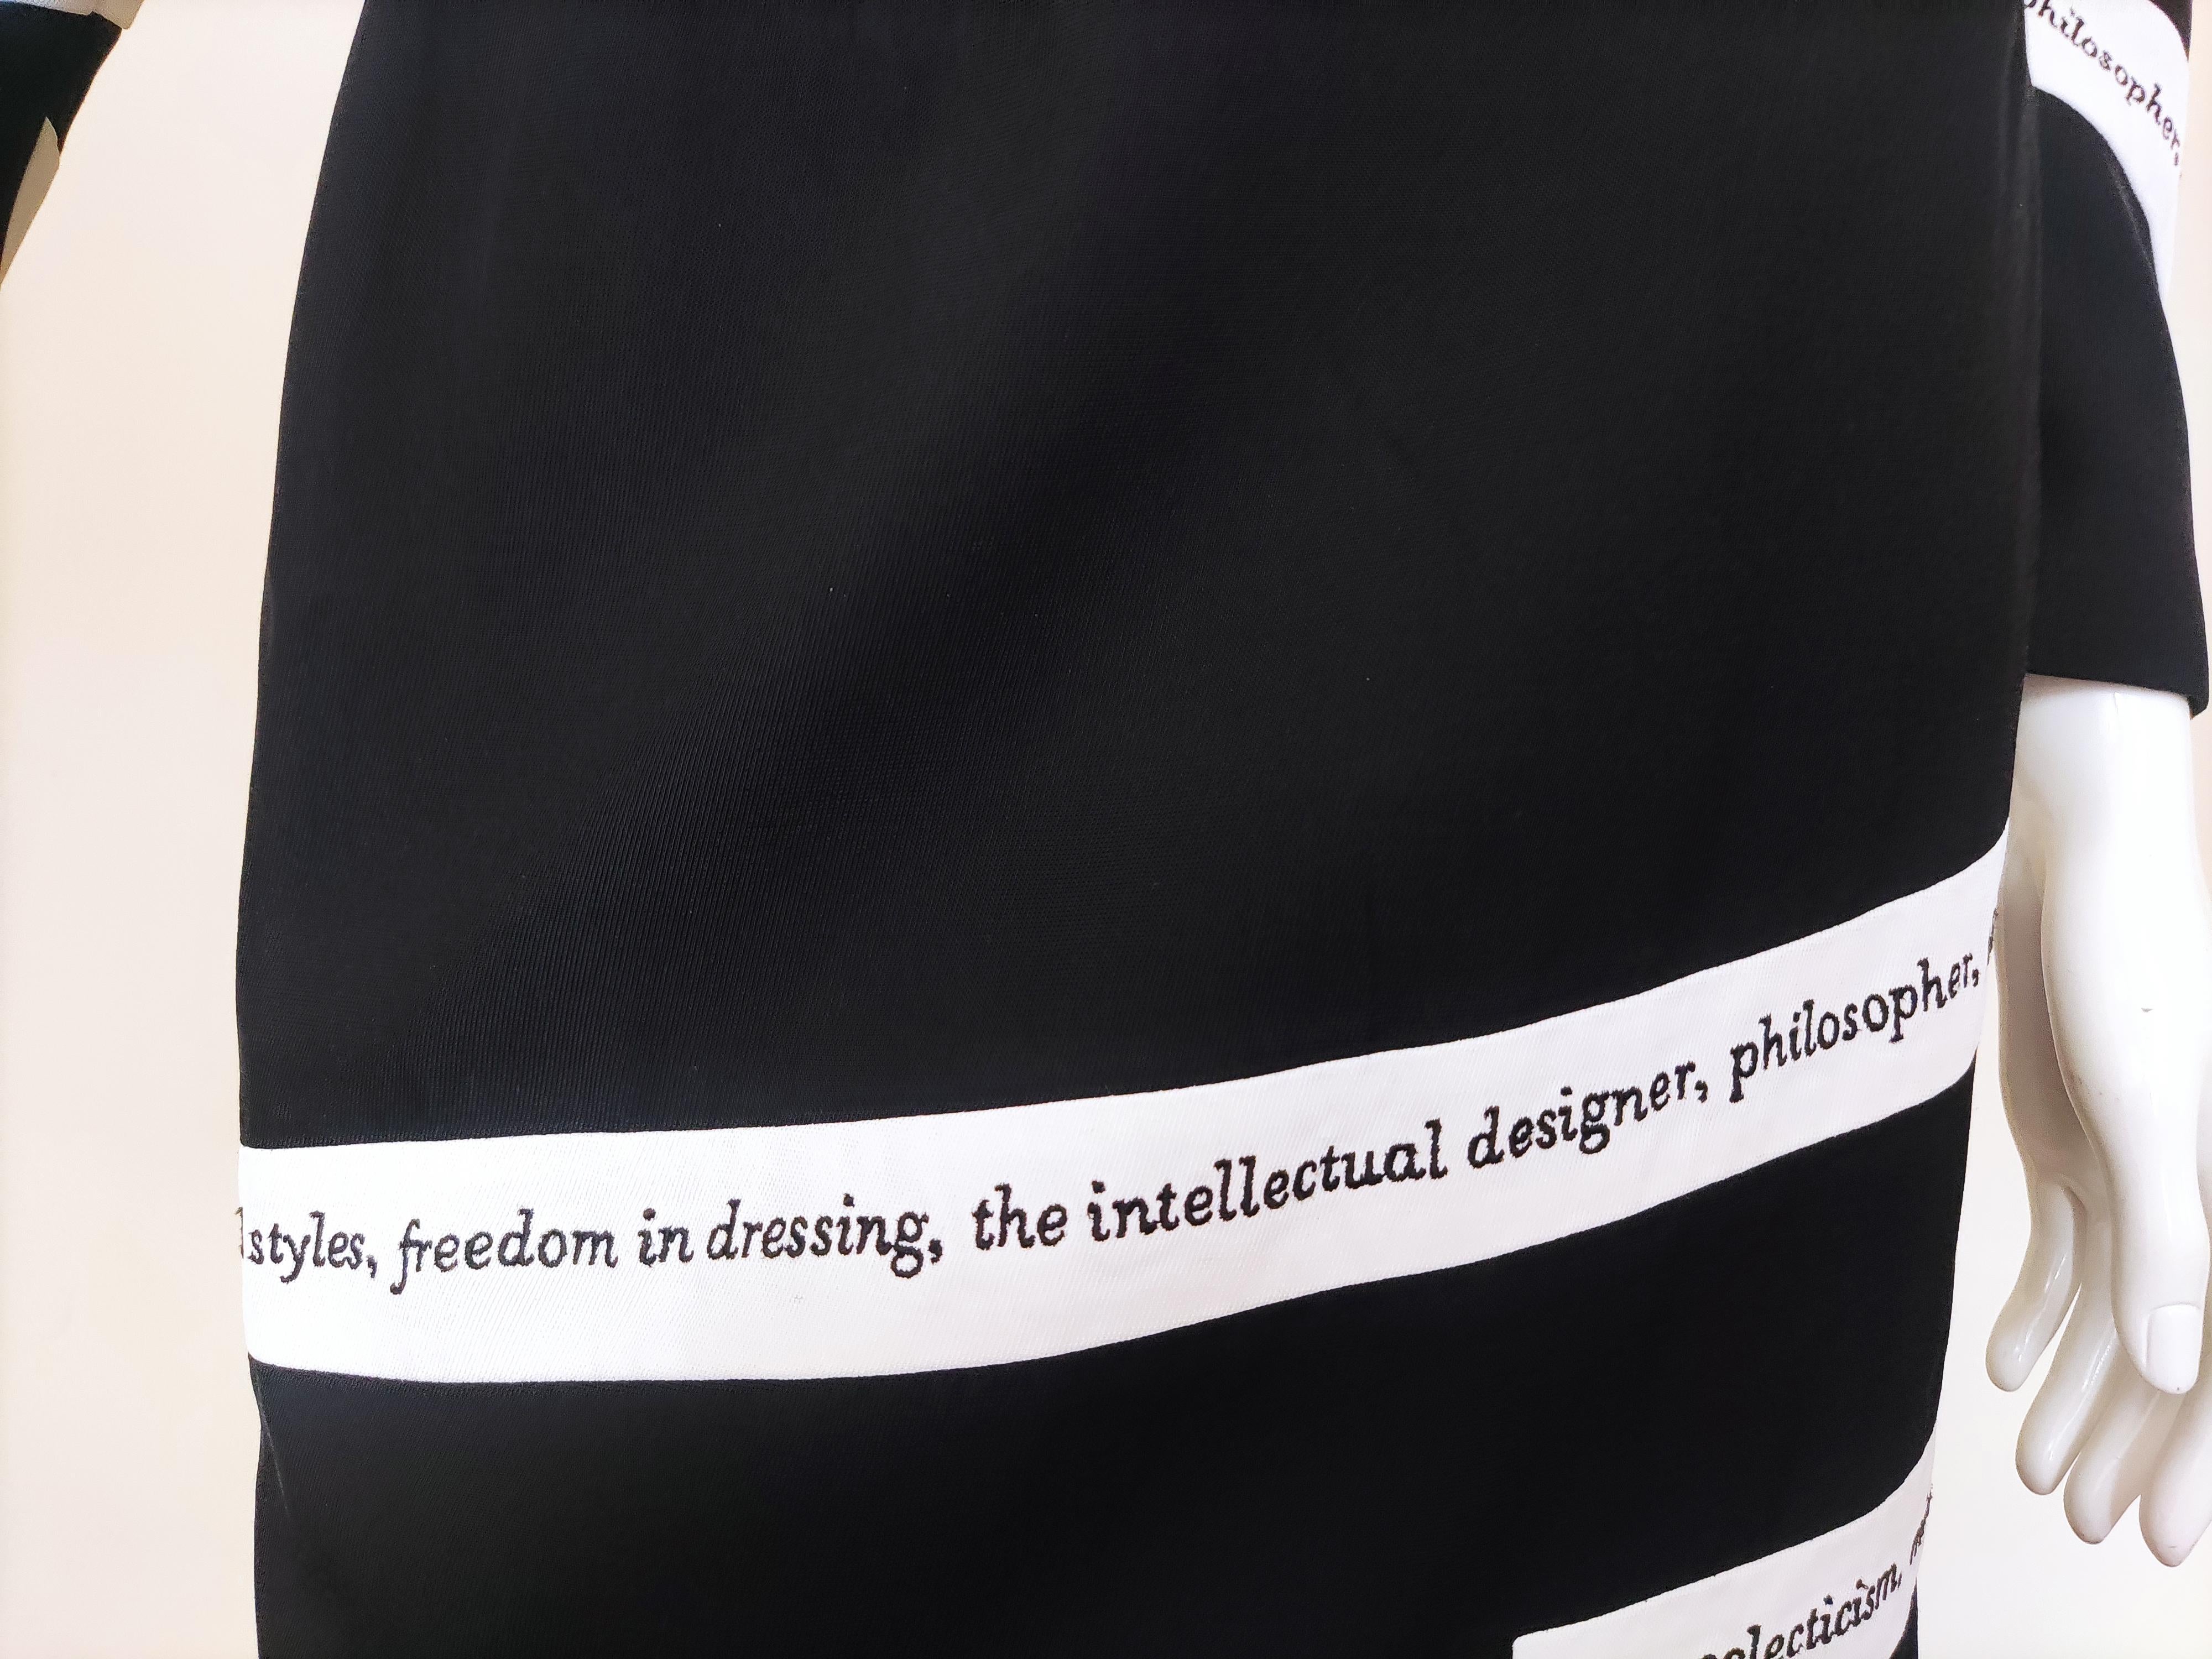 Moschino Cheap and Chic Irony Text Tape Vintage Couture Schwarz-Weißes Kleid Anzug im Angebot 8